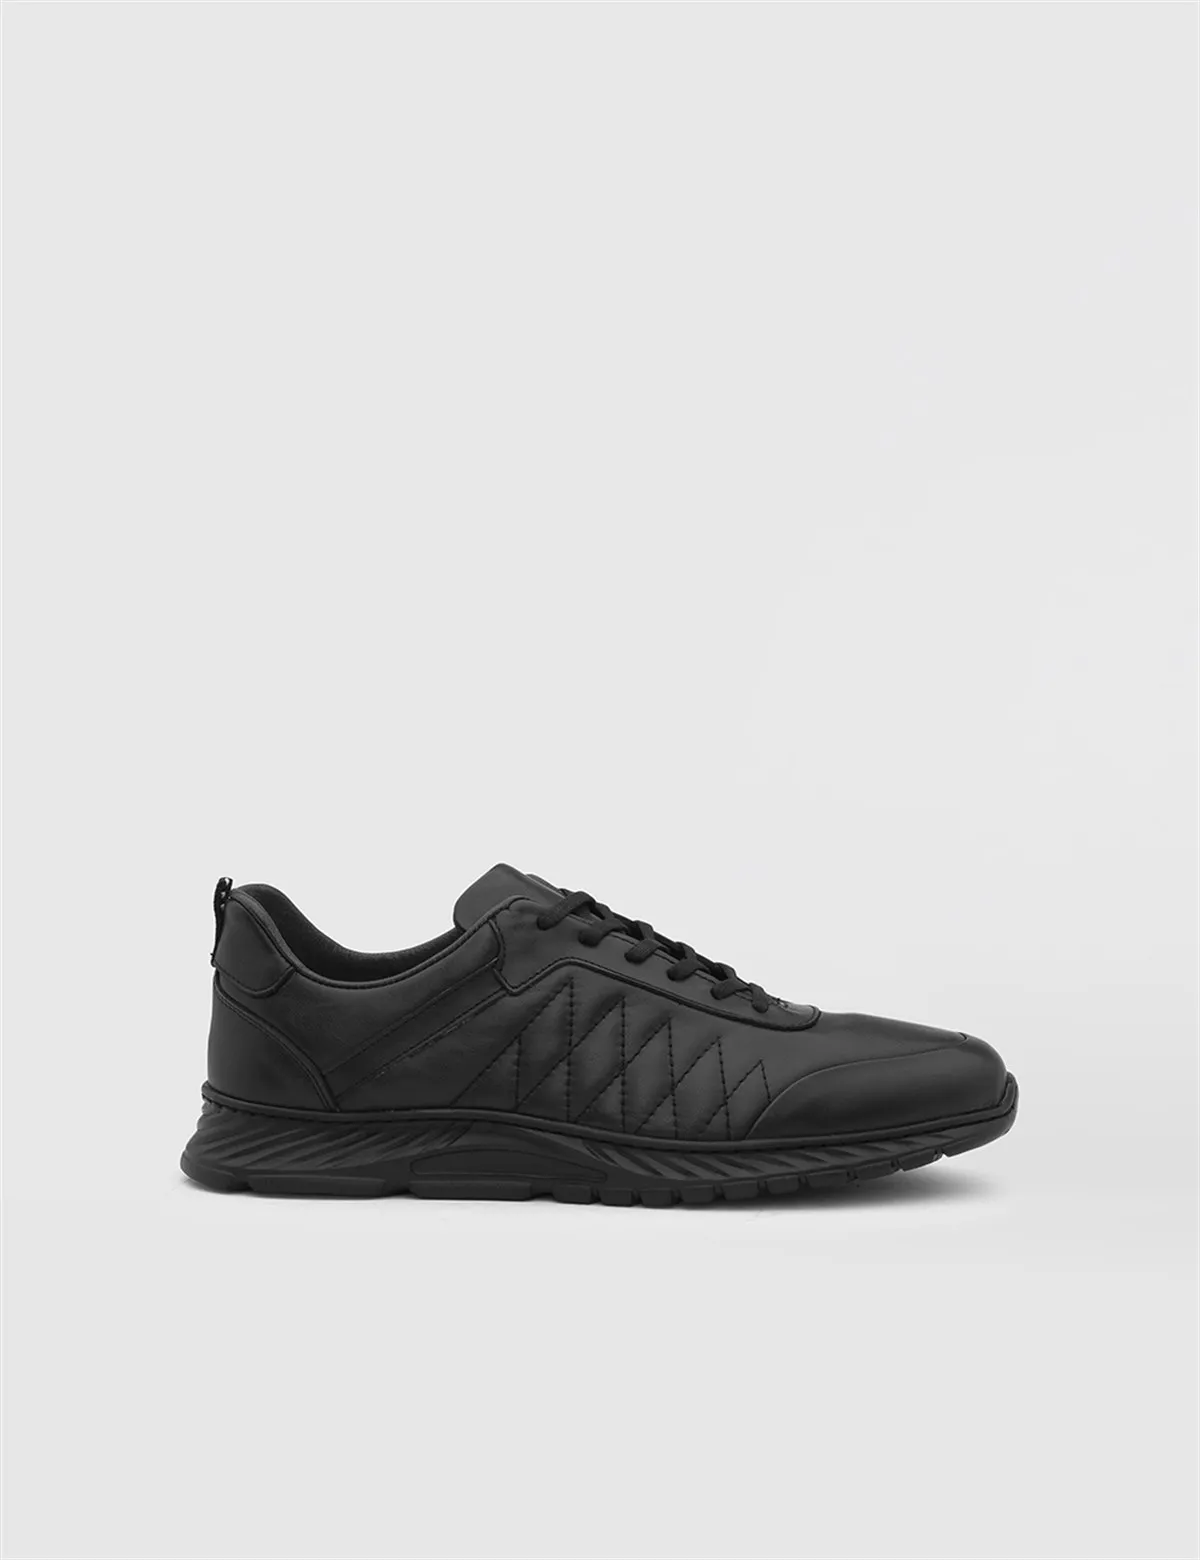 

ILVi-Genuine Leather Handmade Tilia Black Nappa Sneaker Man's Shoes 2022 Fall/Winter